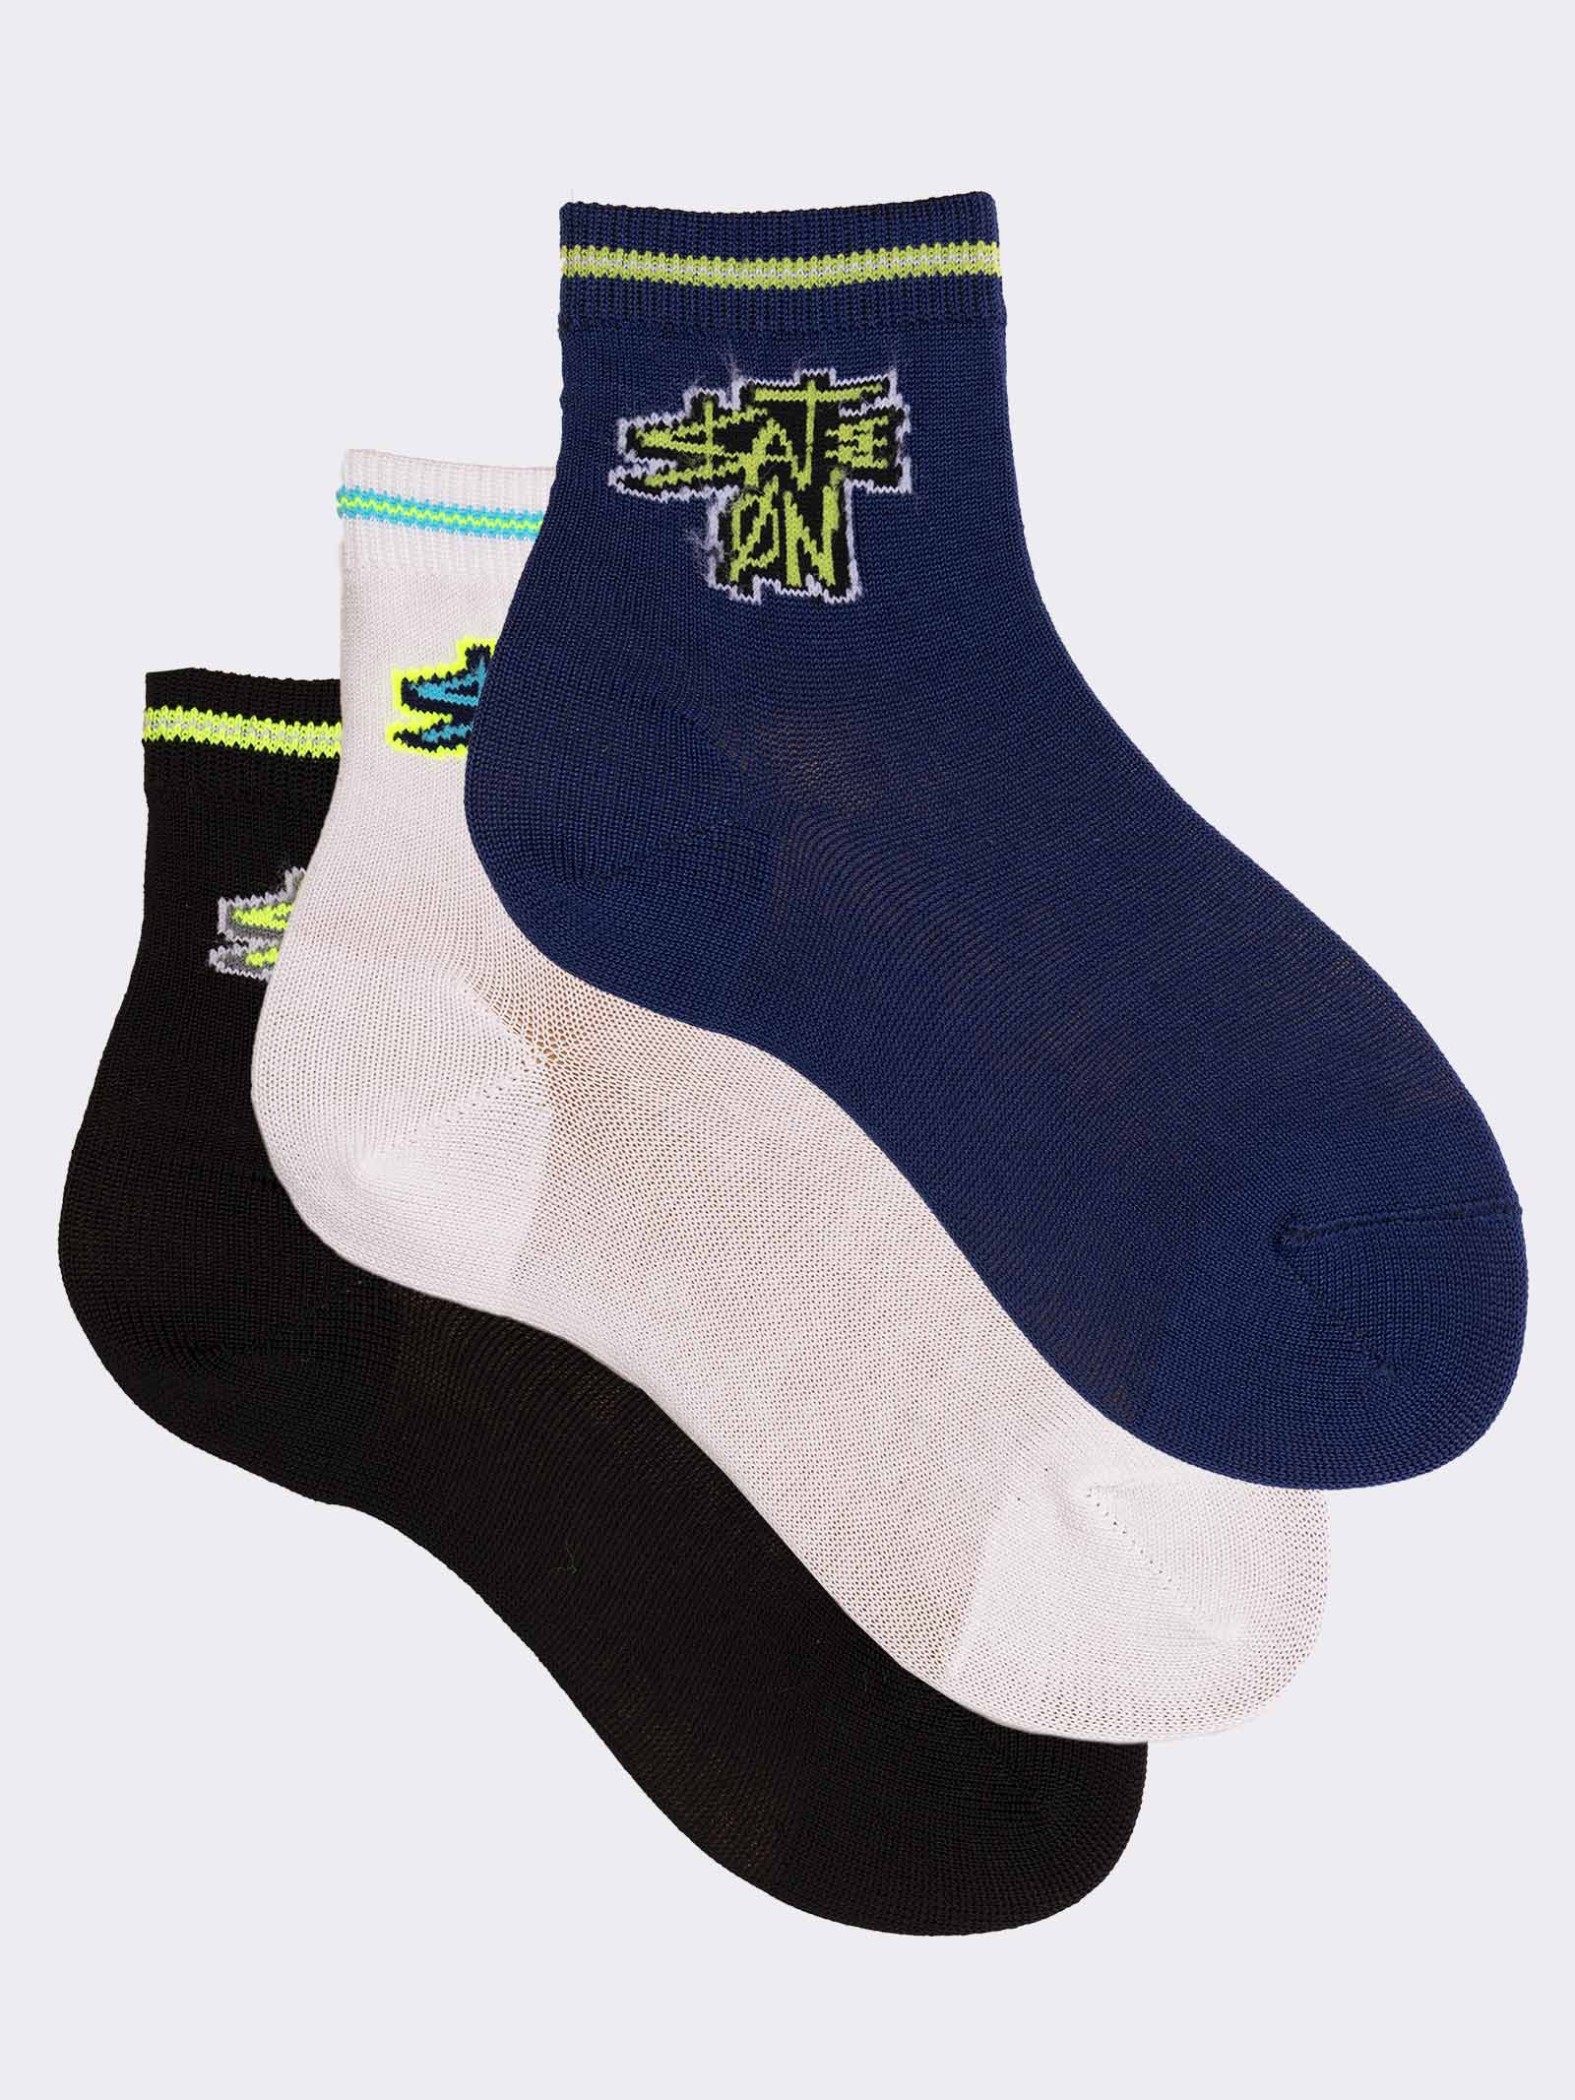 Dreierpack kurze Kinder-Socken mit Skate On-Muster in kühler Baumwolle